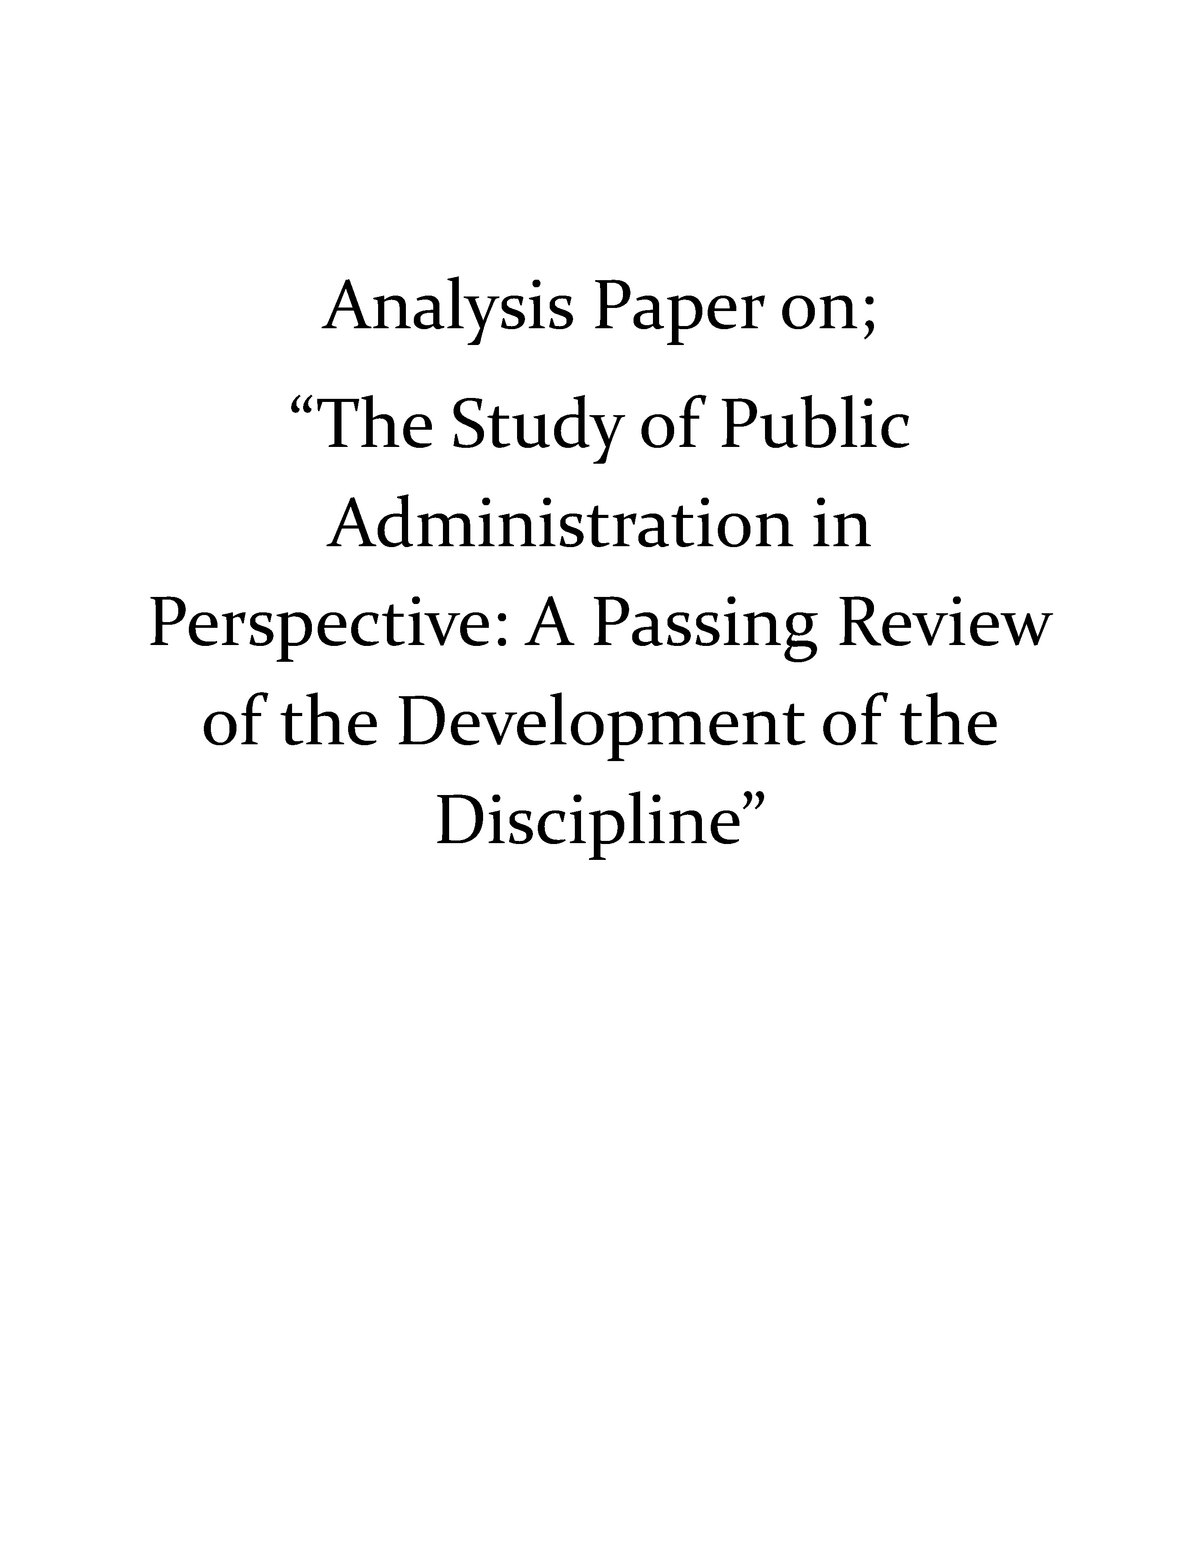 dissertation topics in public administration